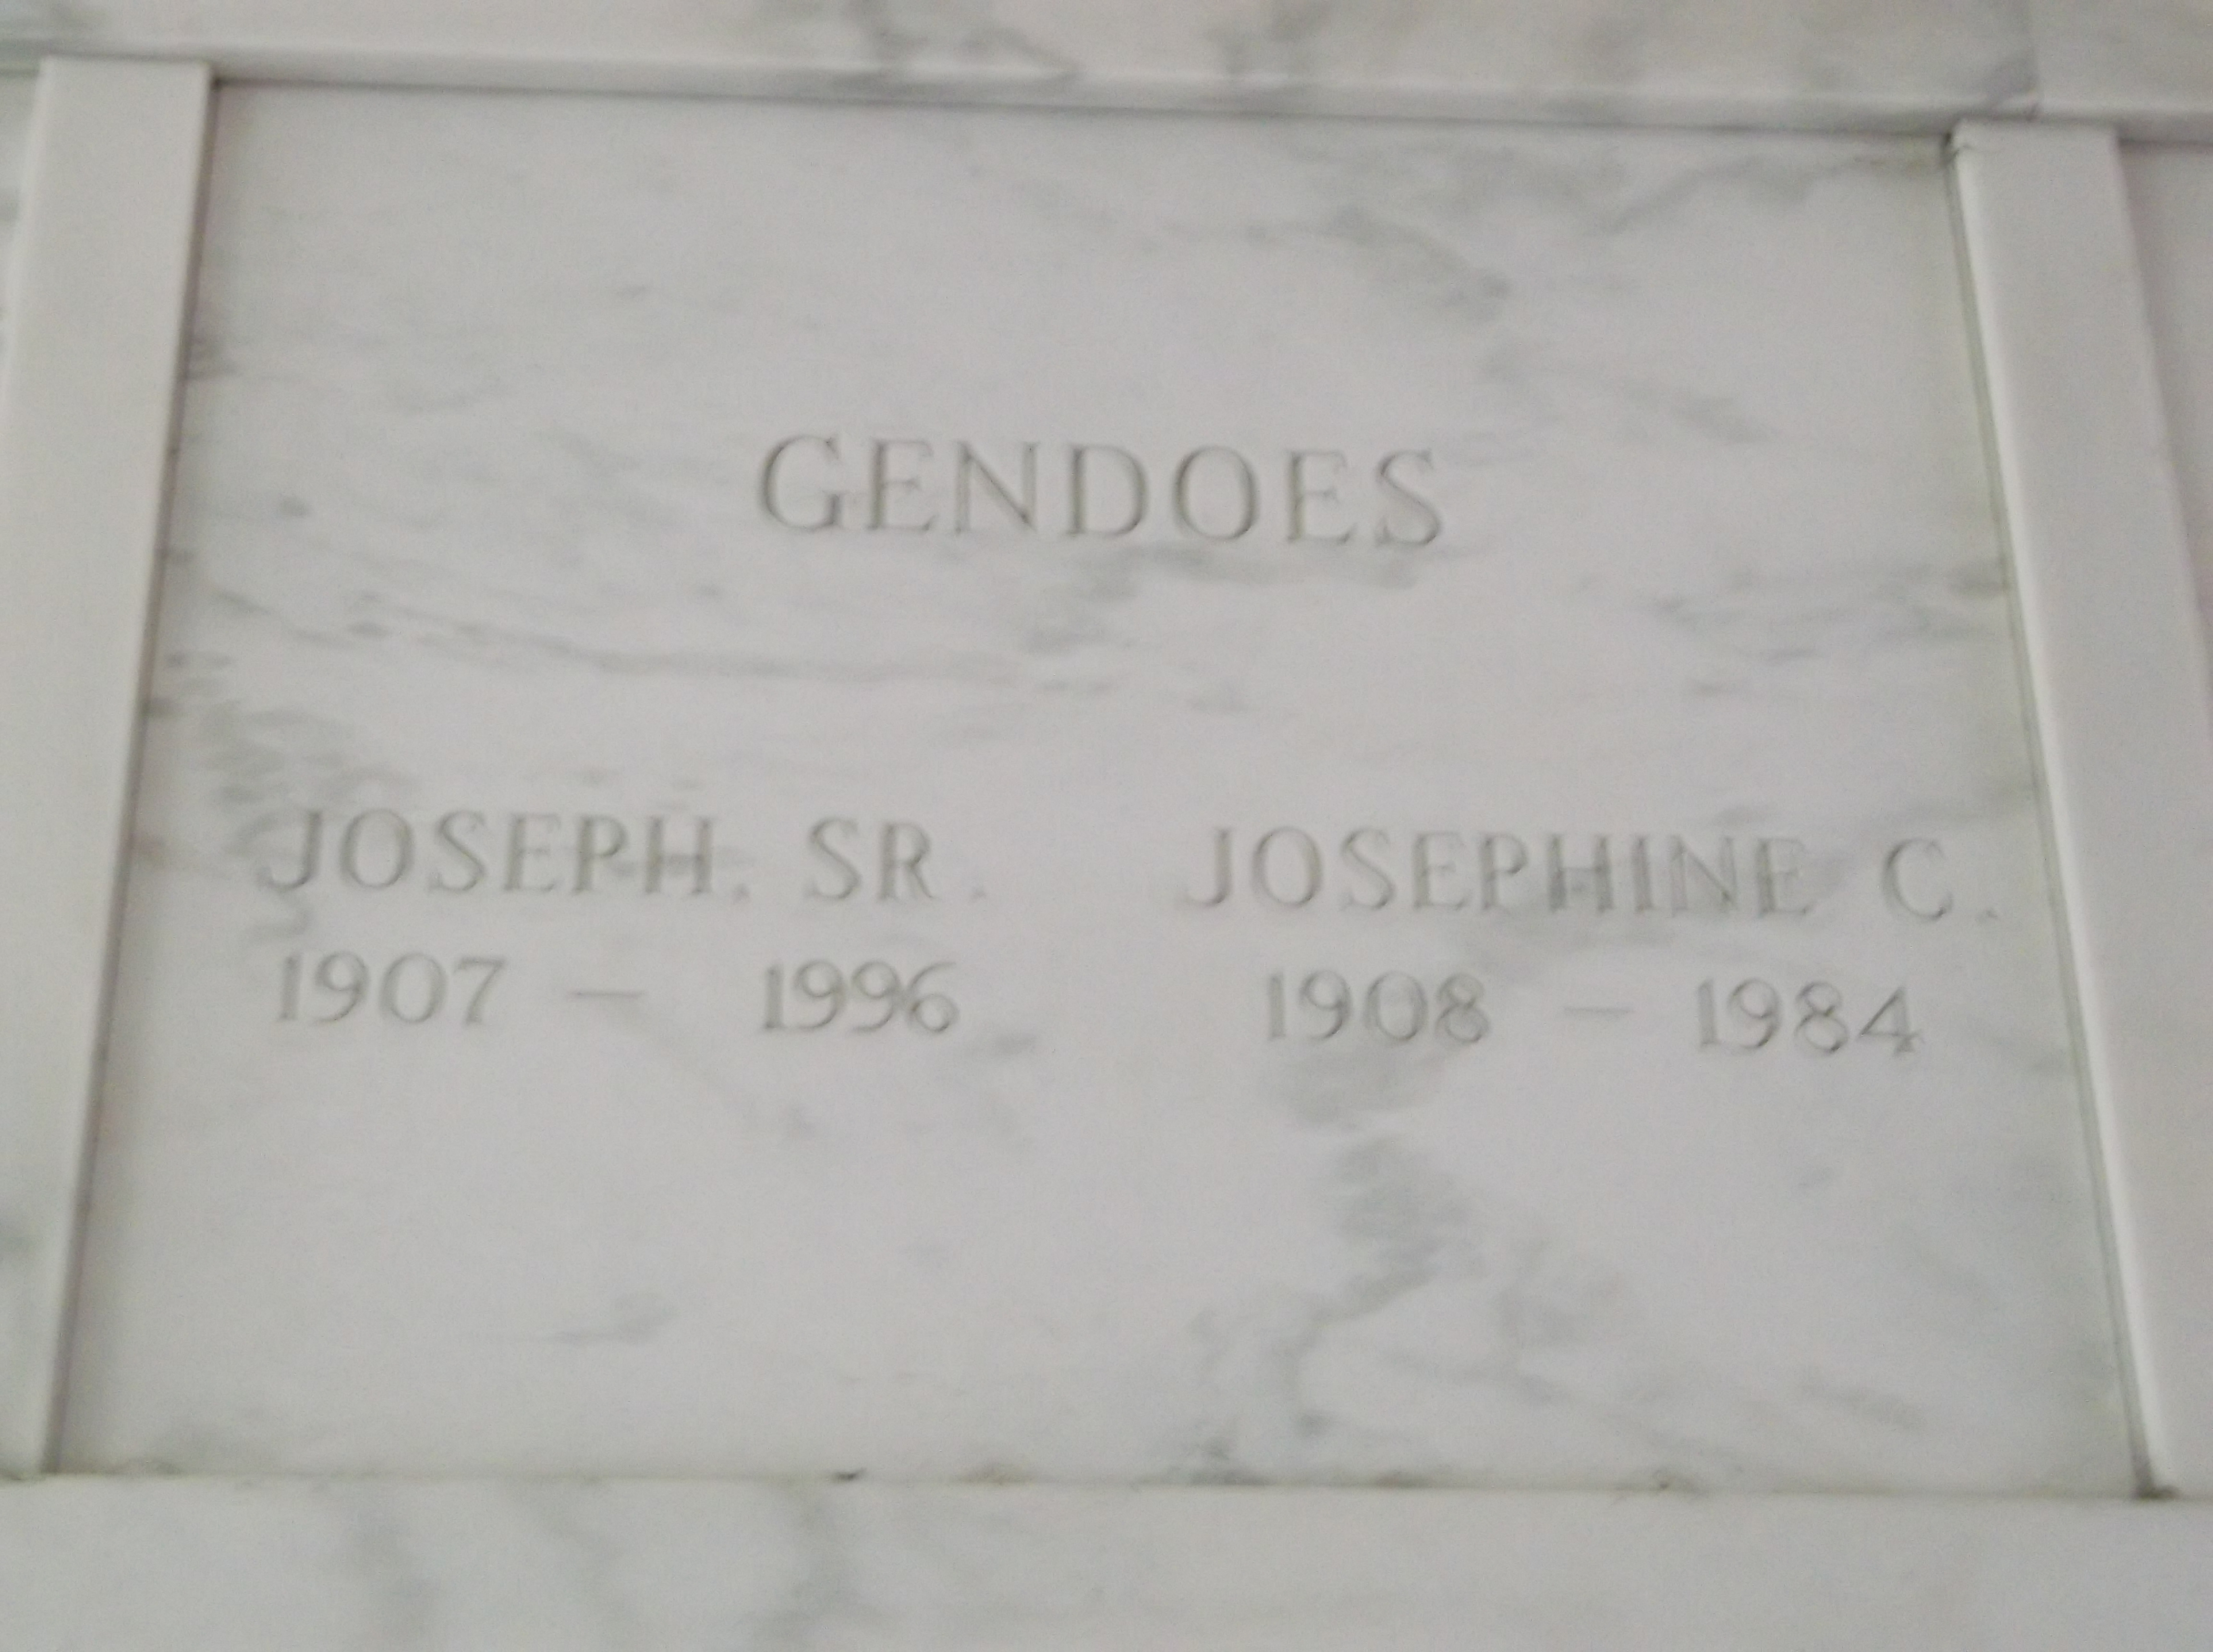 Joseph Gendoes, Sr